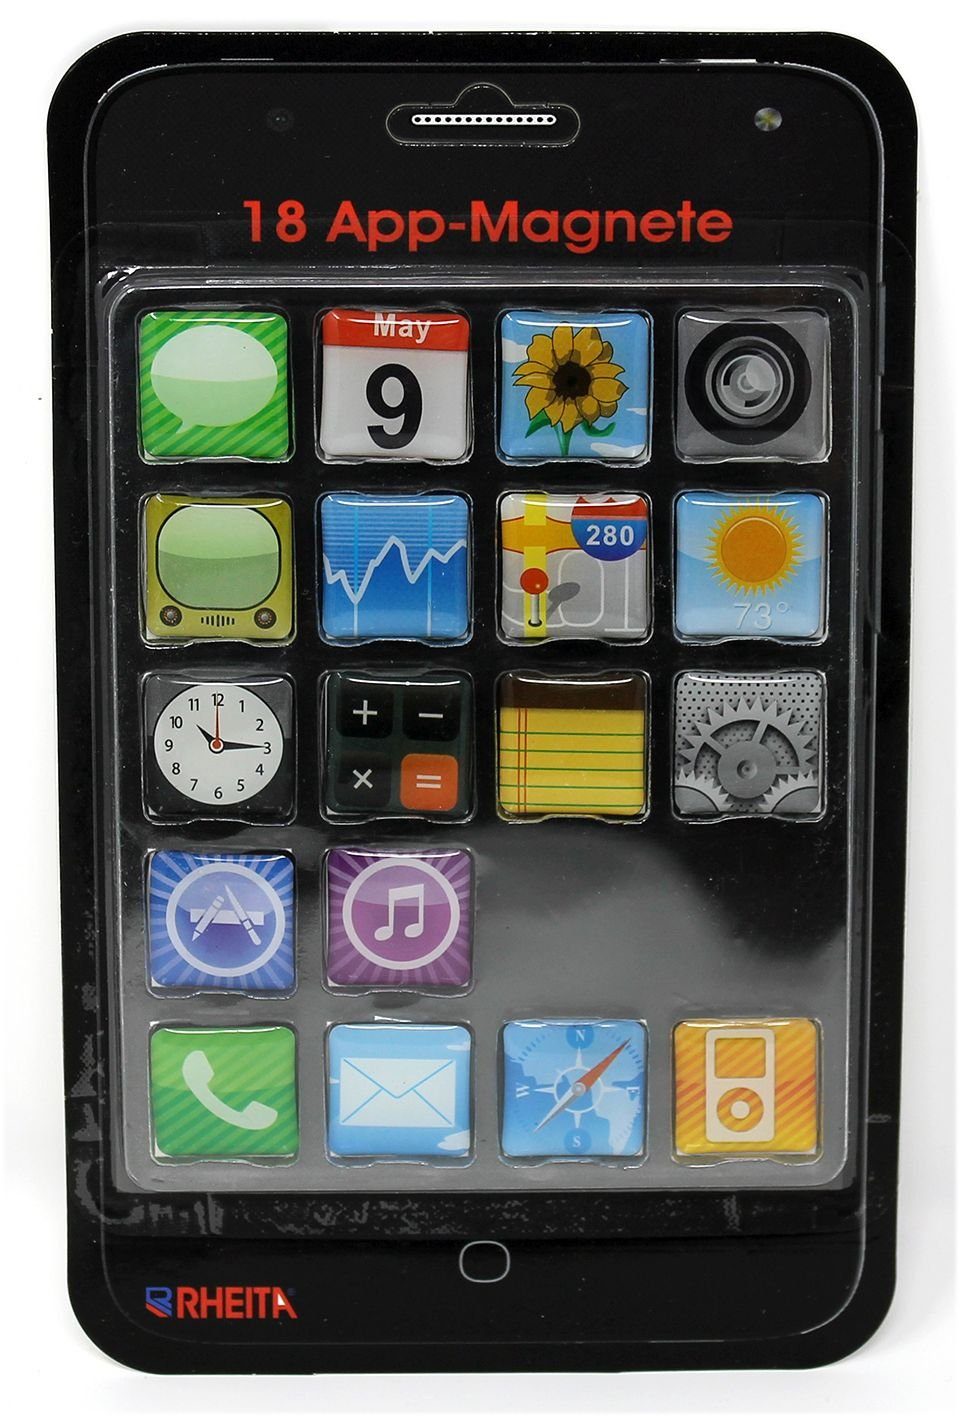 Rheita Handgelenkstütze Magnete im App-Design - 20 x 20 x 3,5 mm, 18 Stück, sortiert